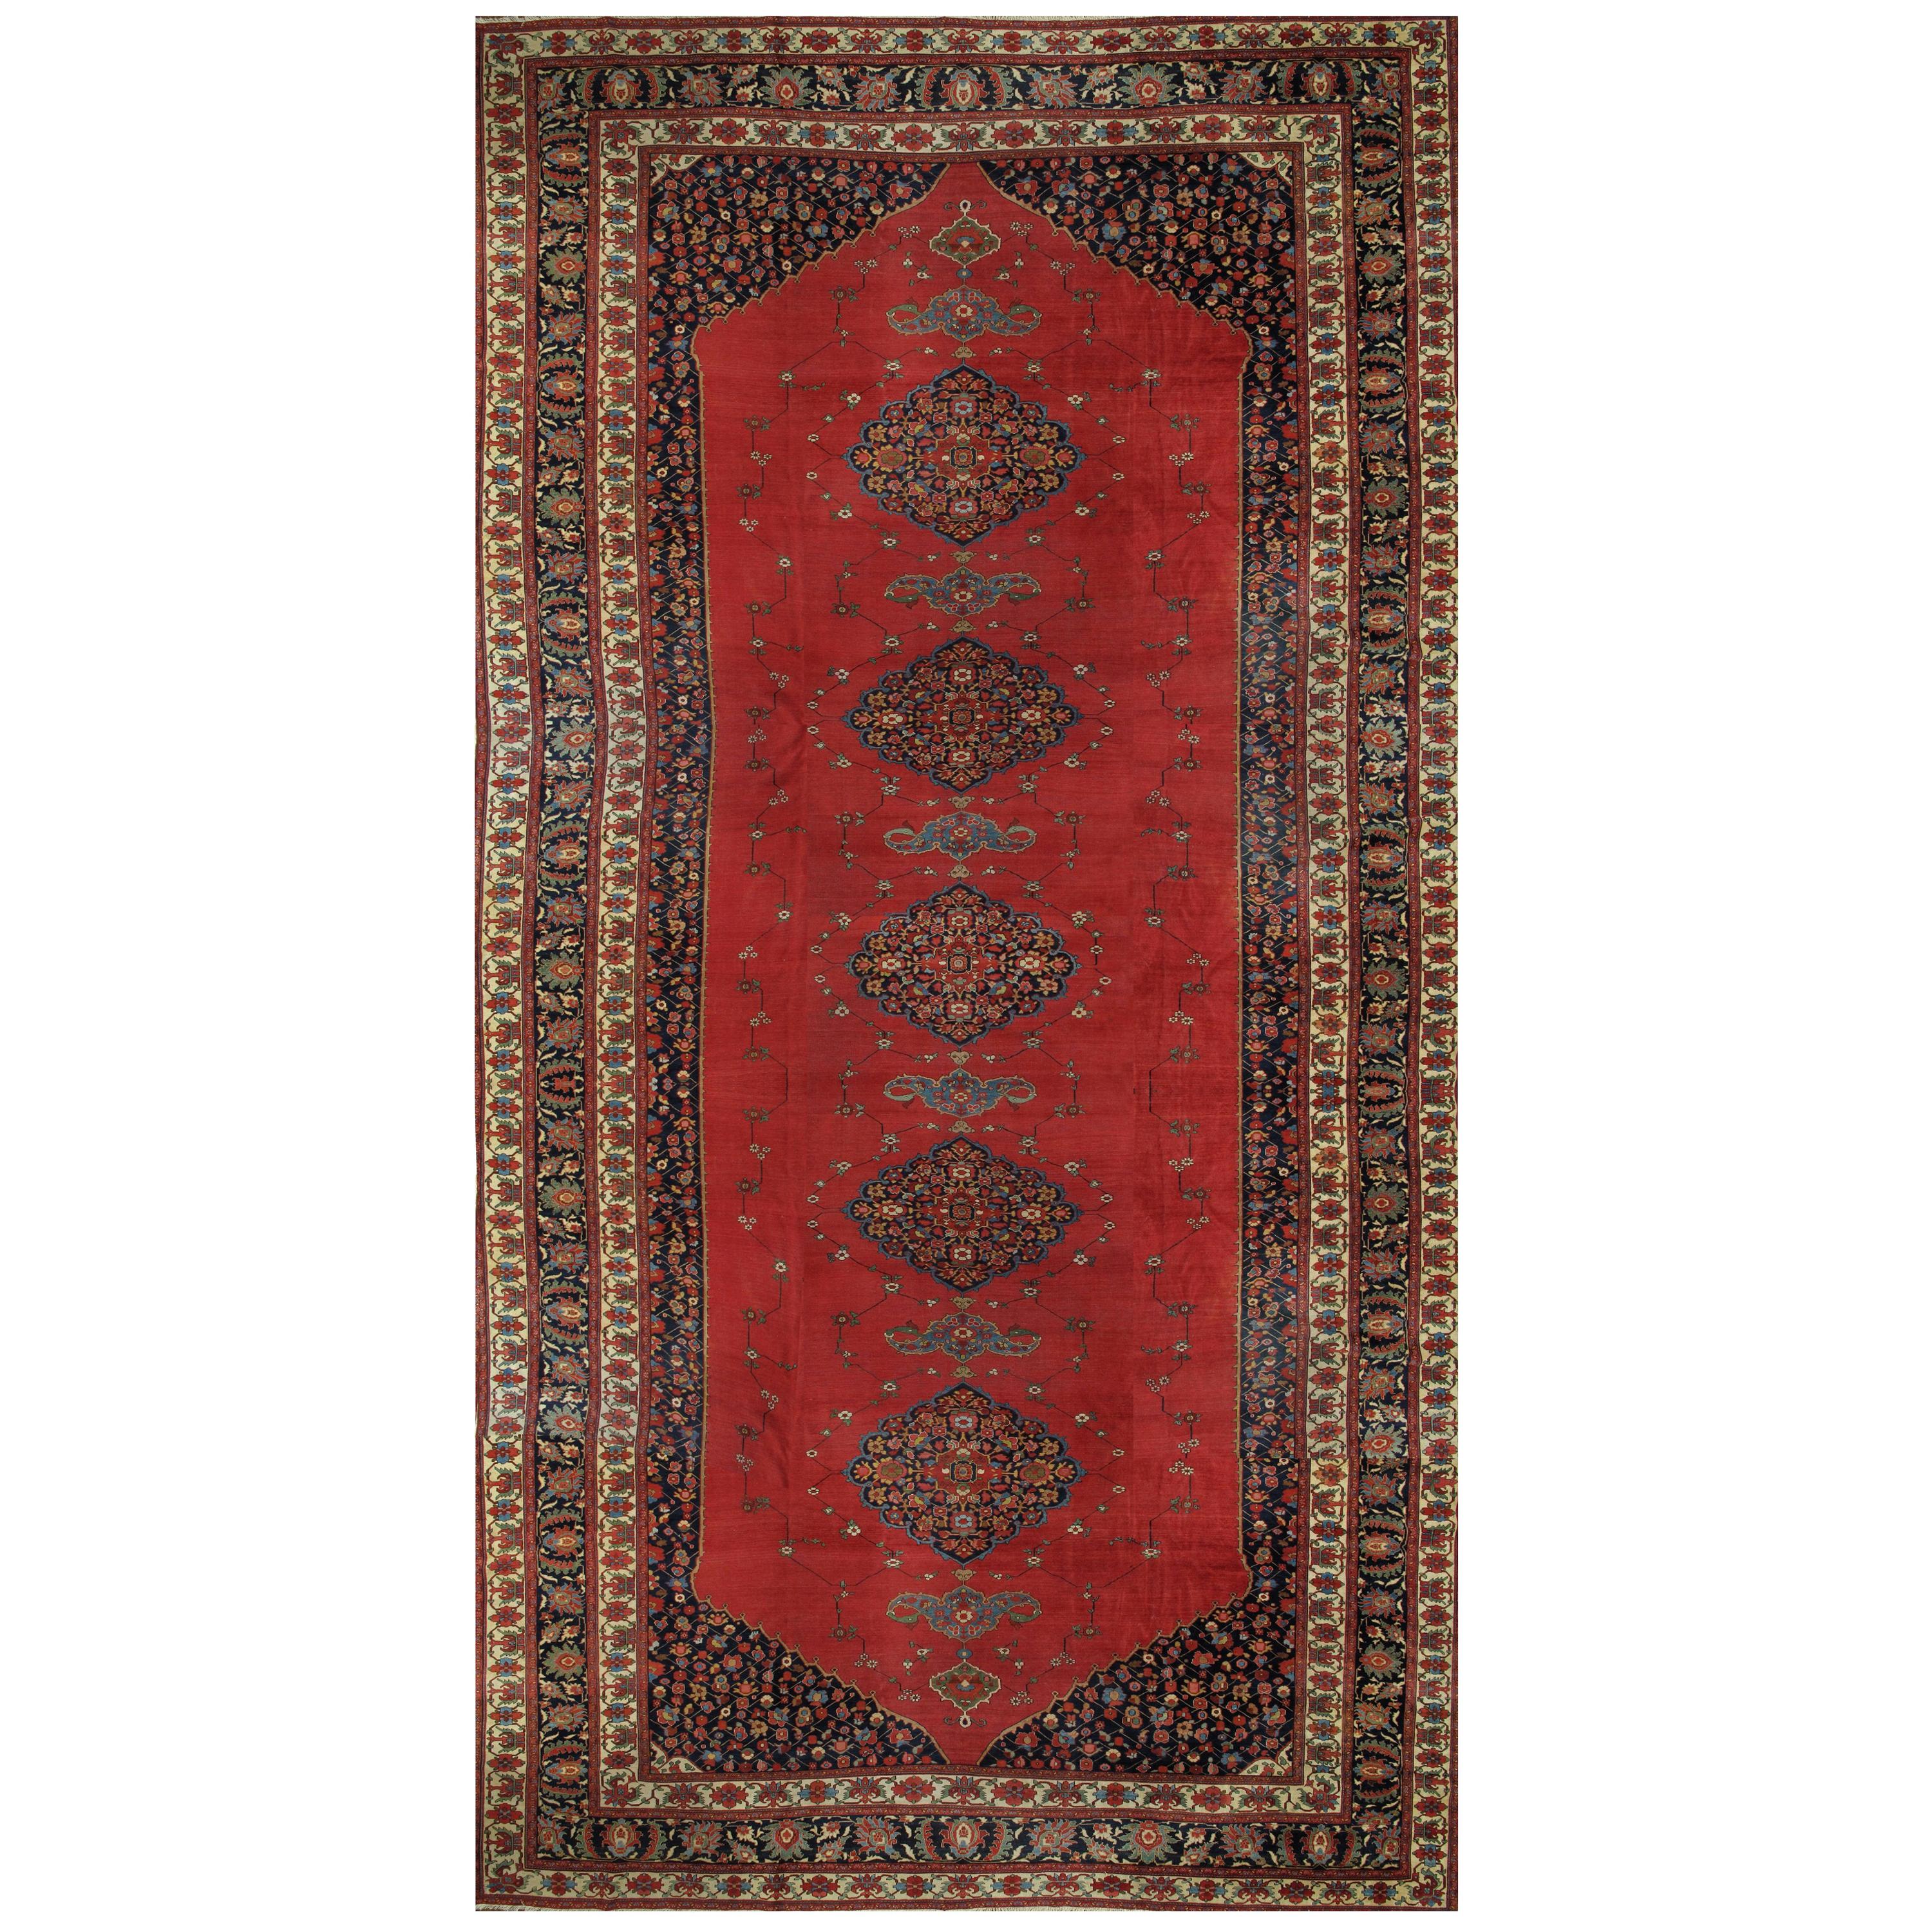 Antique Farahan Sarouk Carpet, Handmade Oriental Rug, Ivory, Navy, Red For Sale